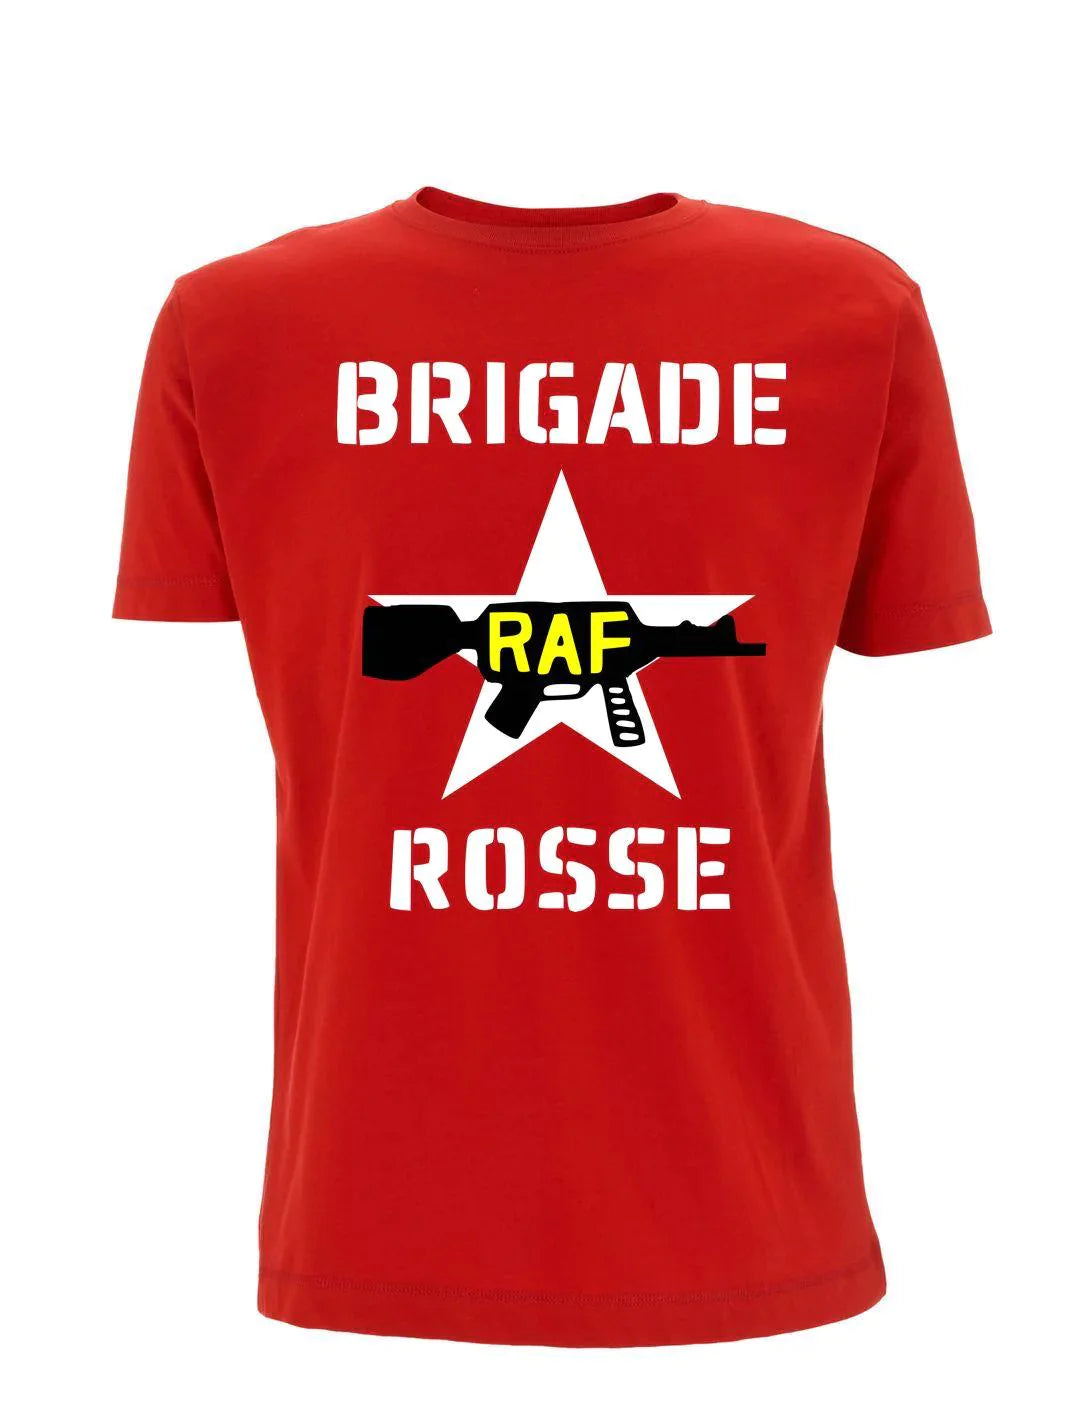 brigade rosse, joe strummer, the clash, as worn byt-shirt